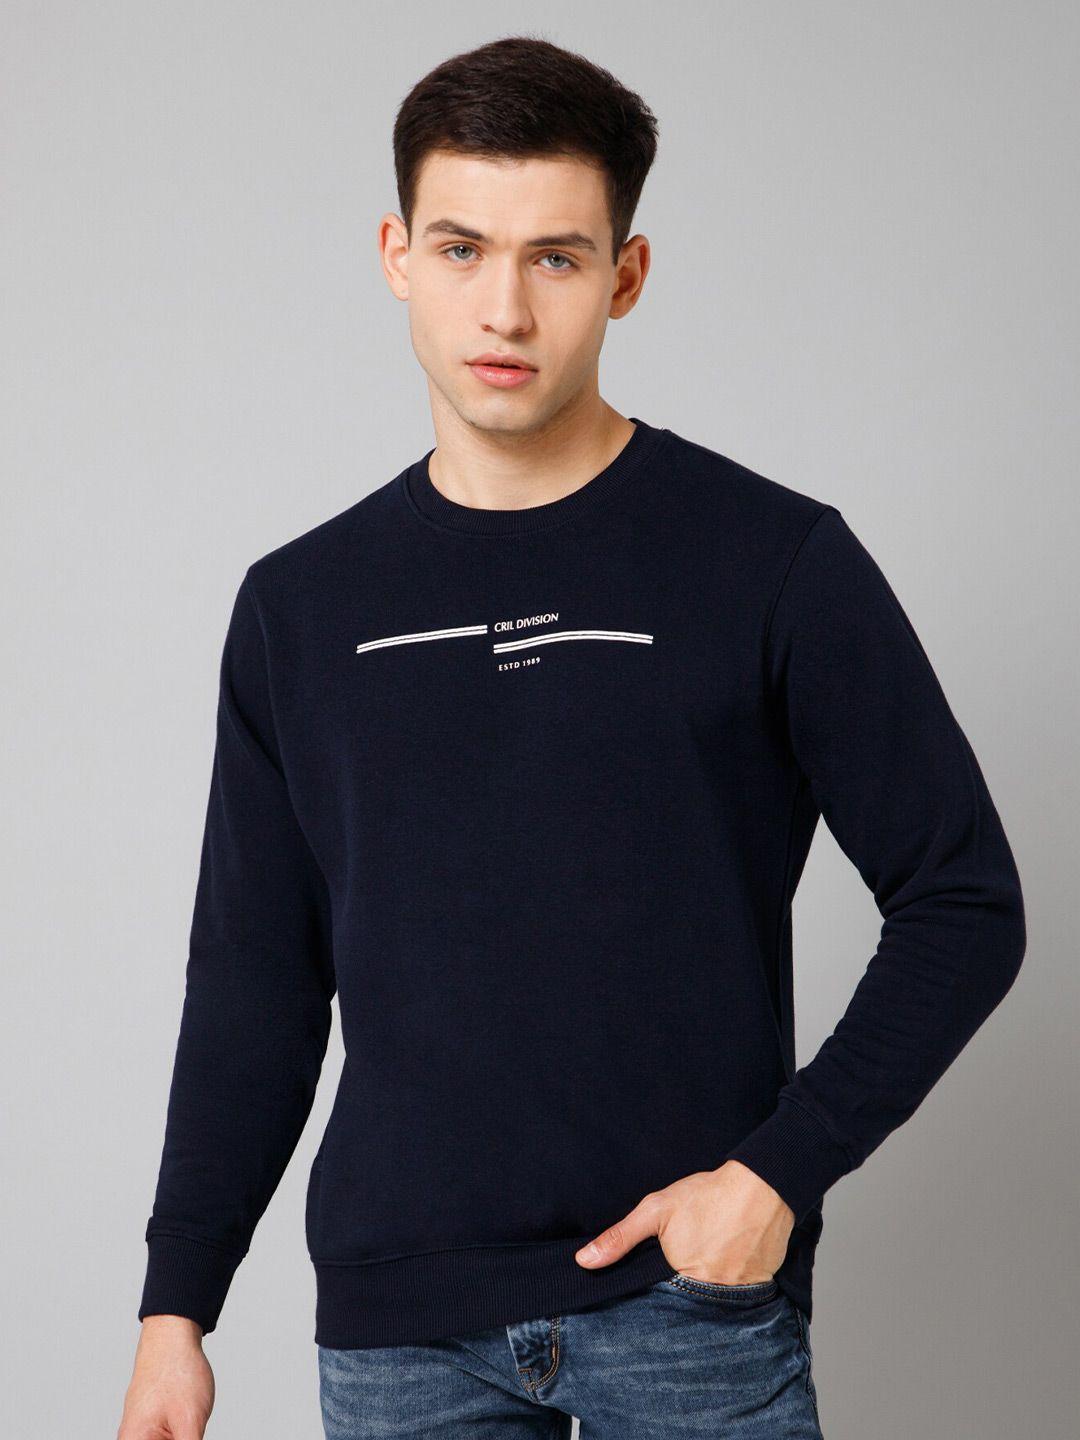 cantabil-typography-printed-fleece-pullover-sweatshirt